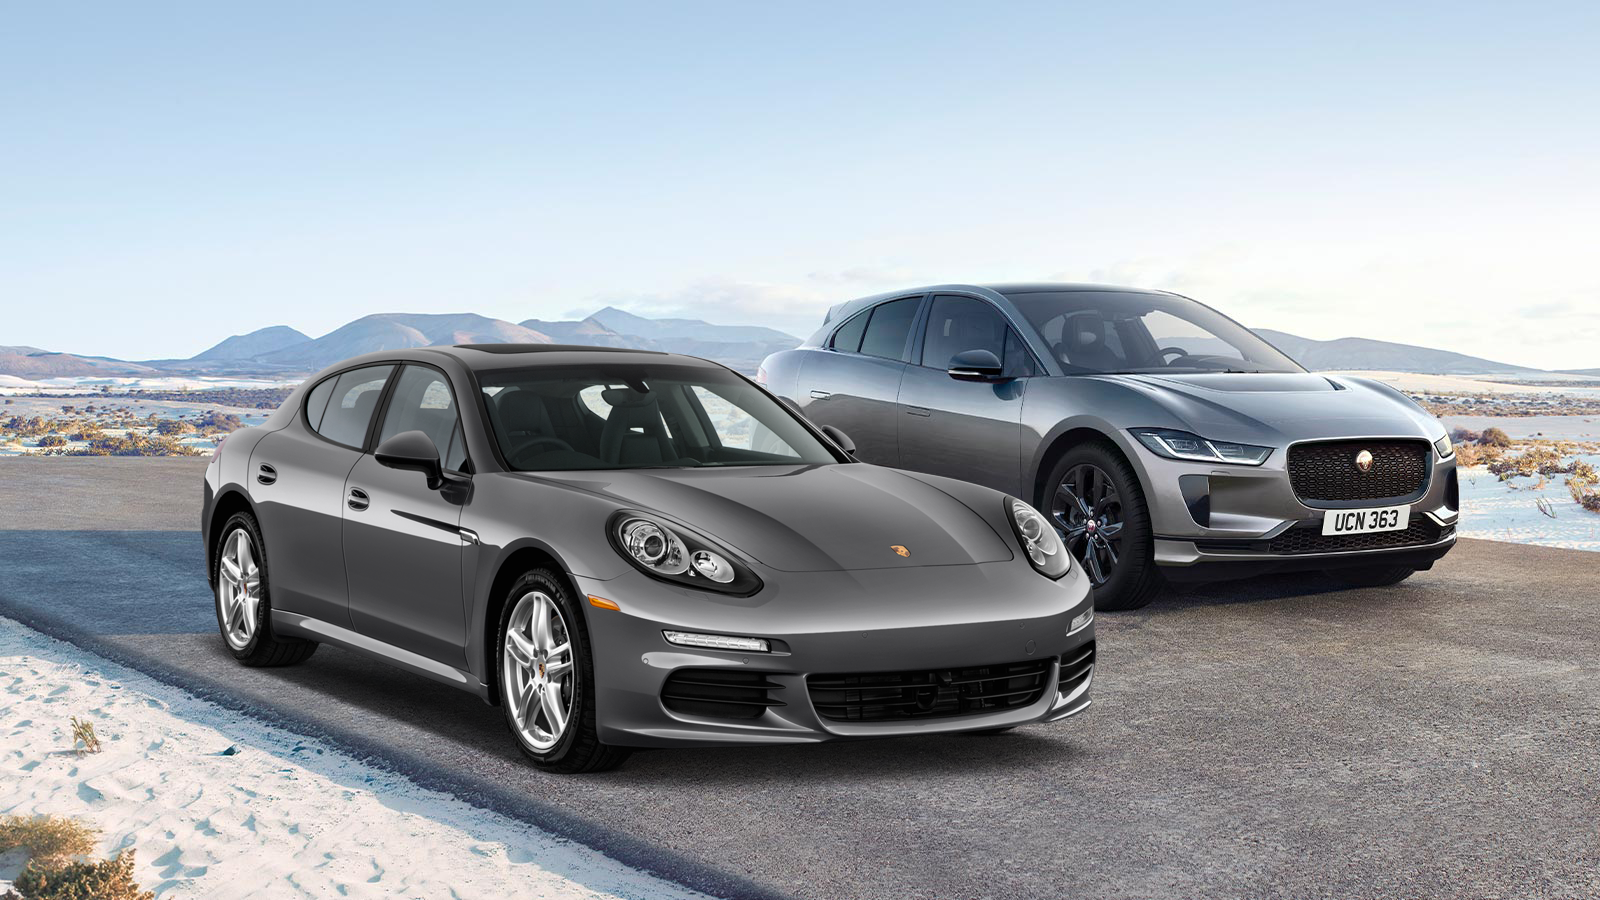 Used Luxury Car: Porsche Vs. Jaguar